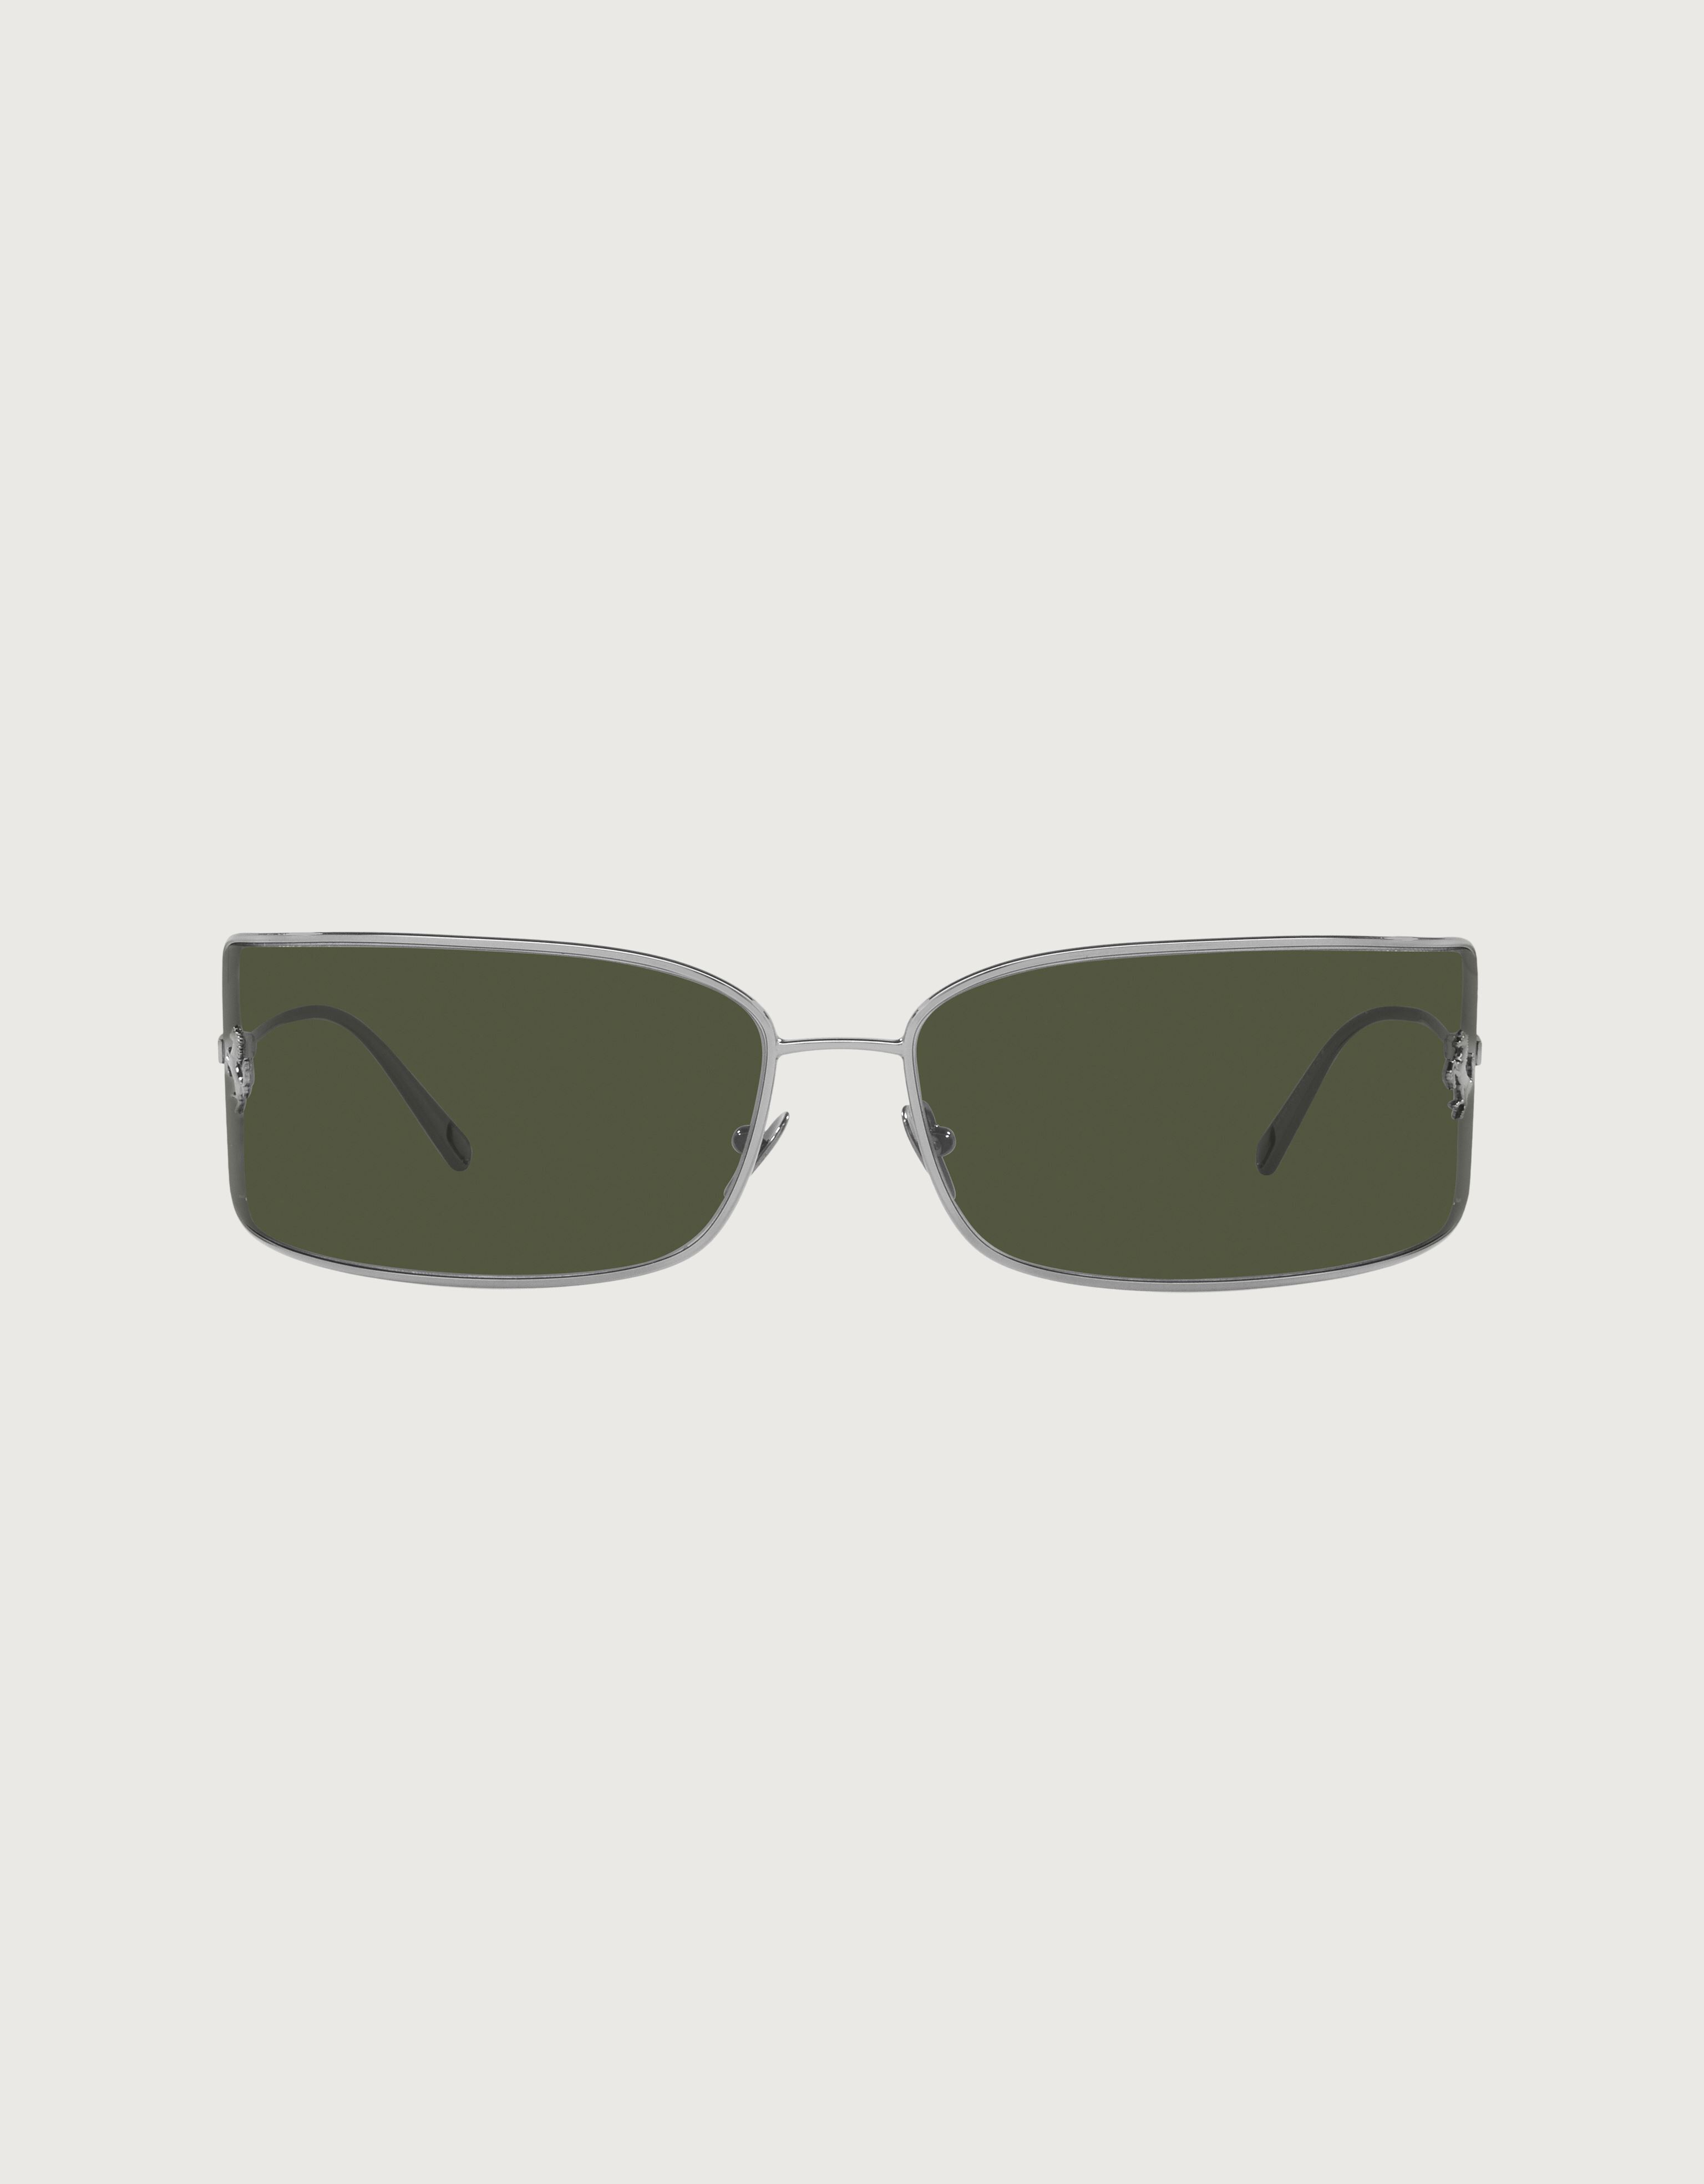 Ferrari Ferrari shield sunglasses with green lenses Dark Grey F0641f